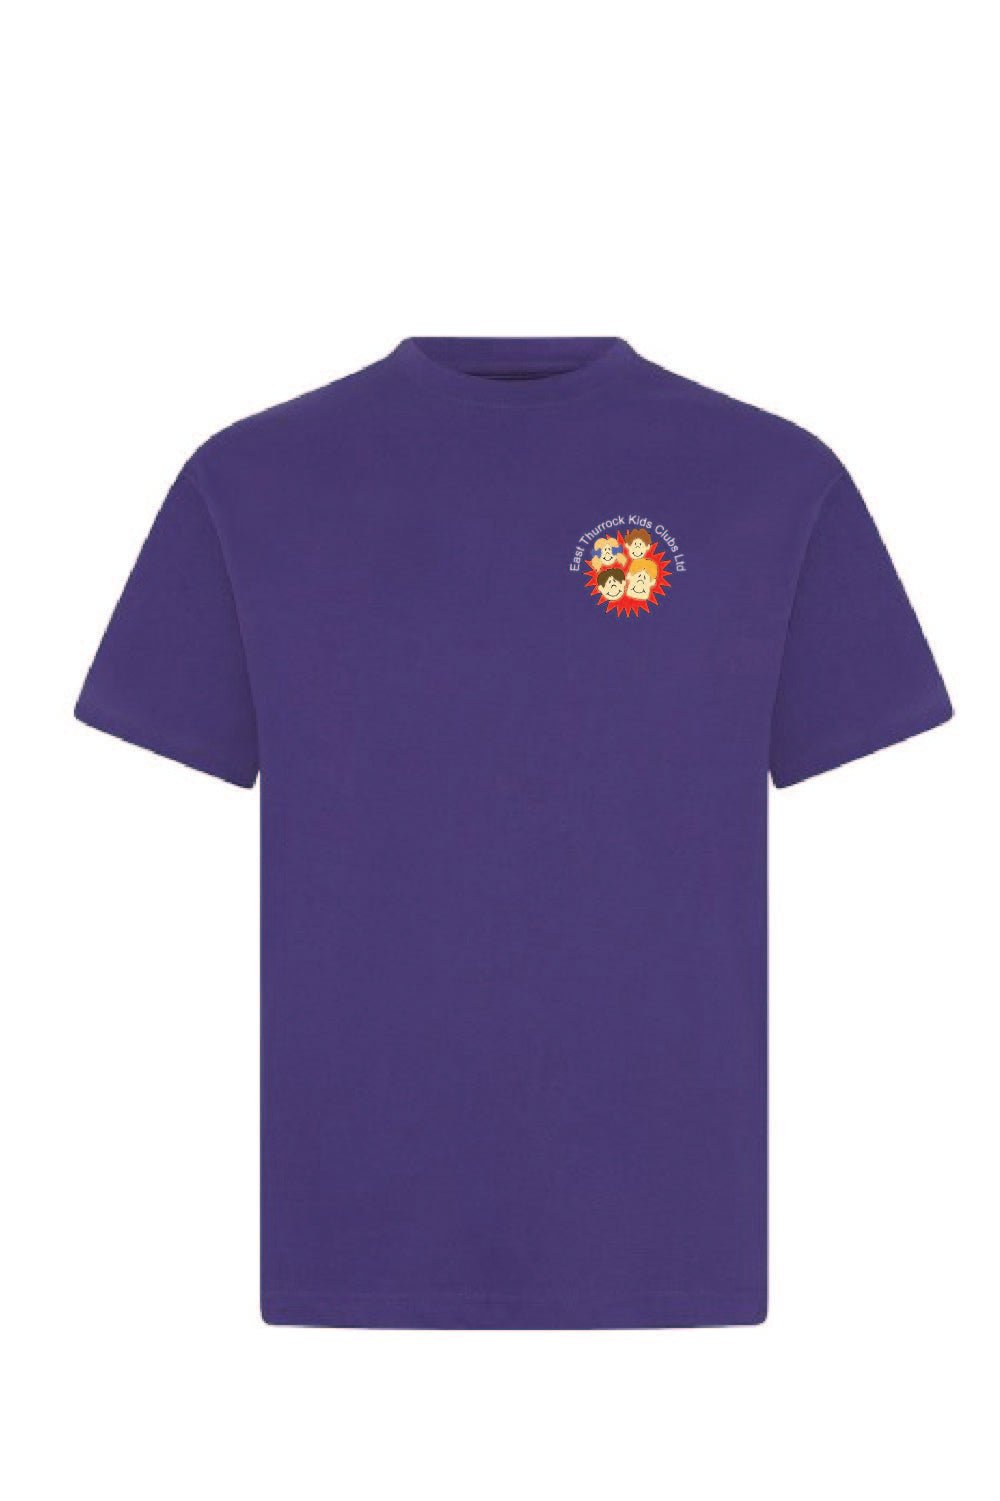 East Thurrock Kids Club T Shirt - Uniformwise Schoolwear